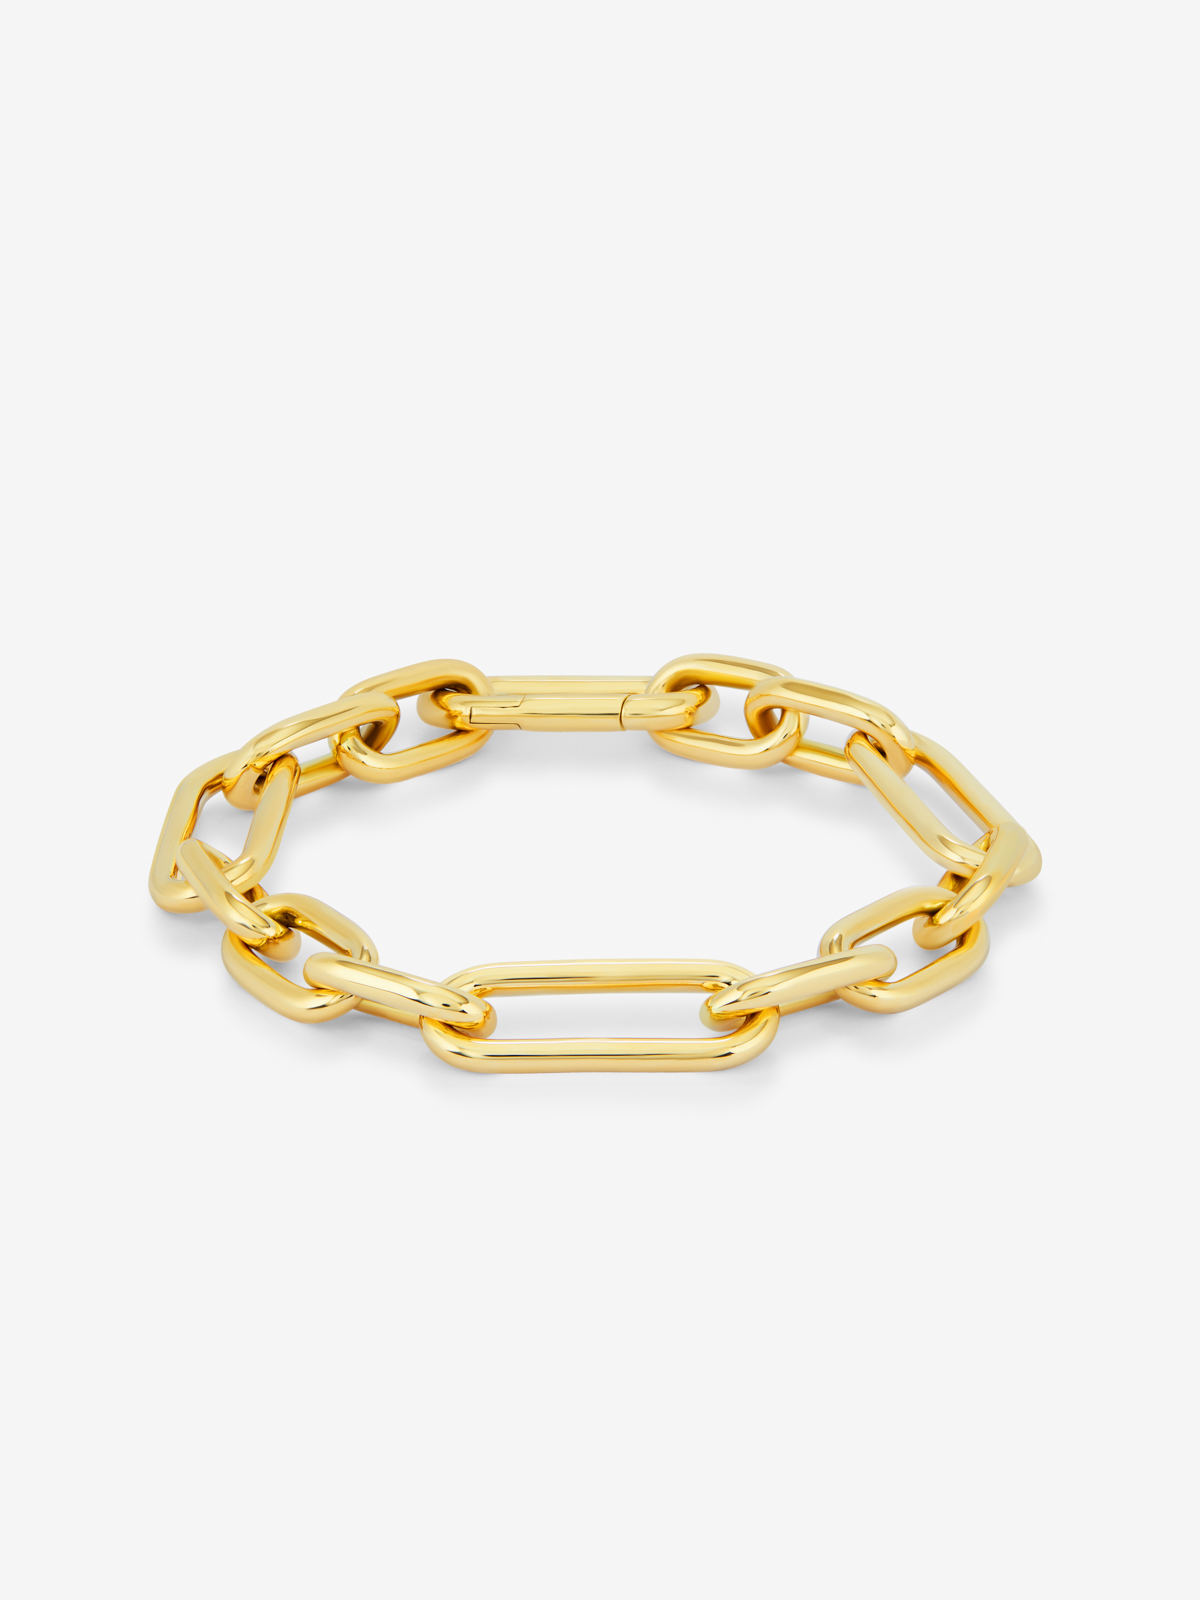 Large link bracelet in 18K yellow gold